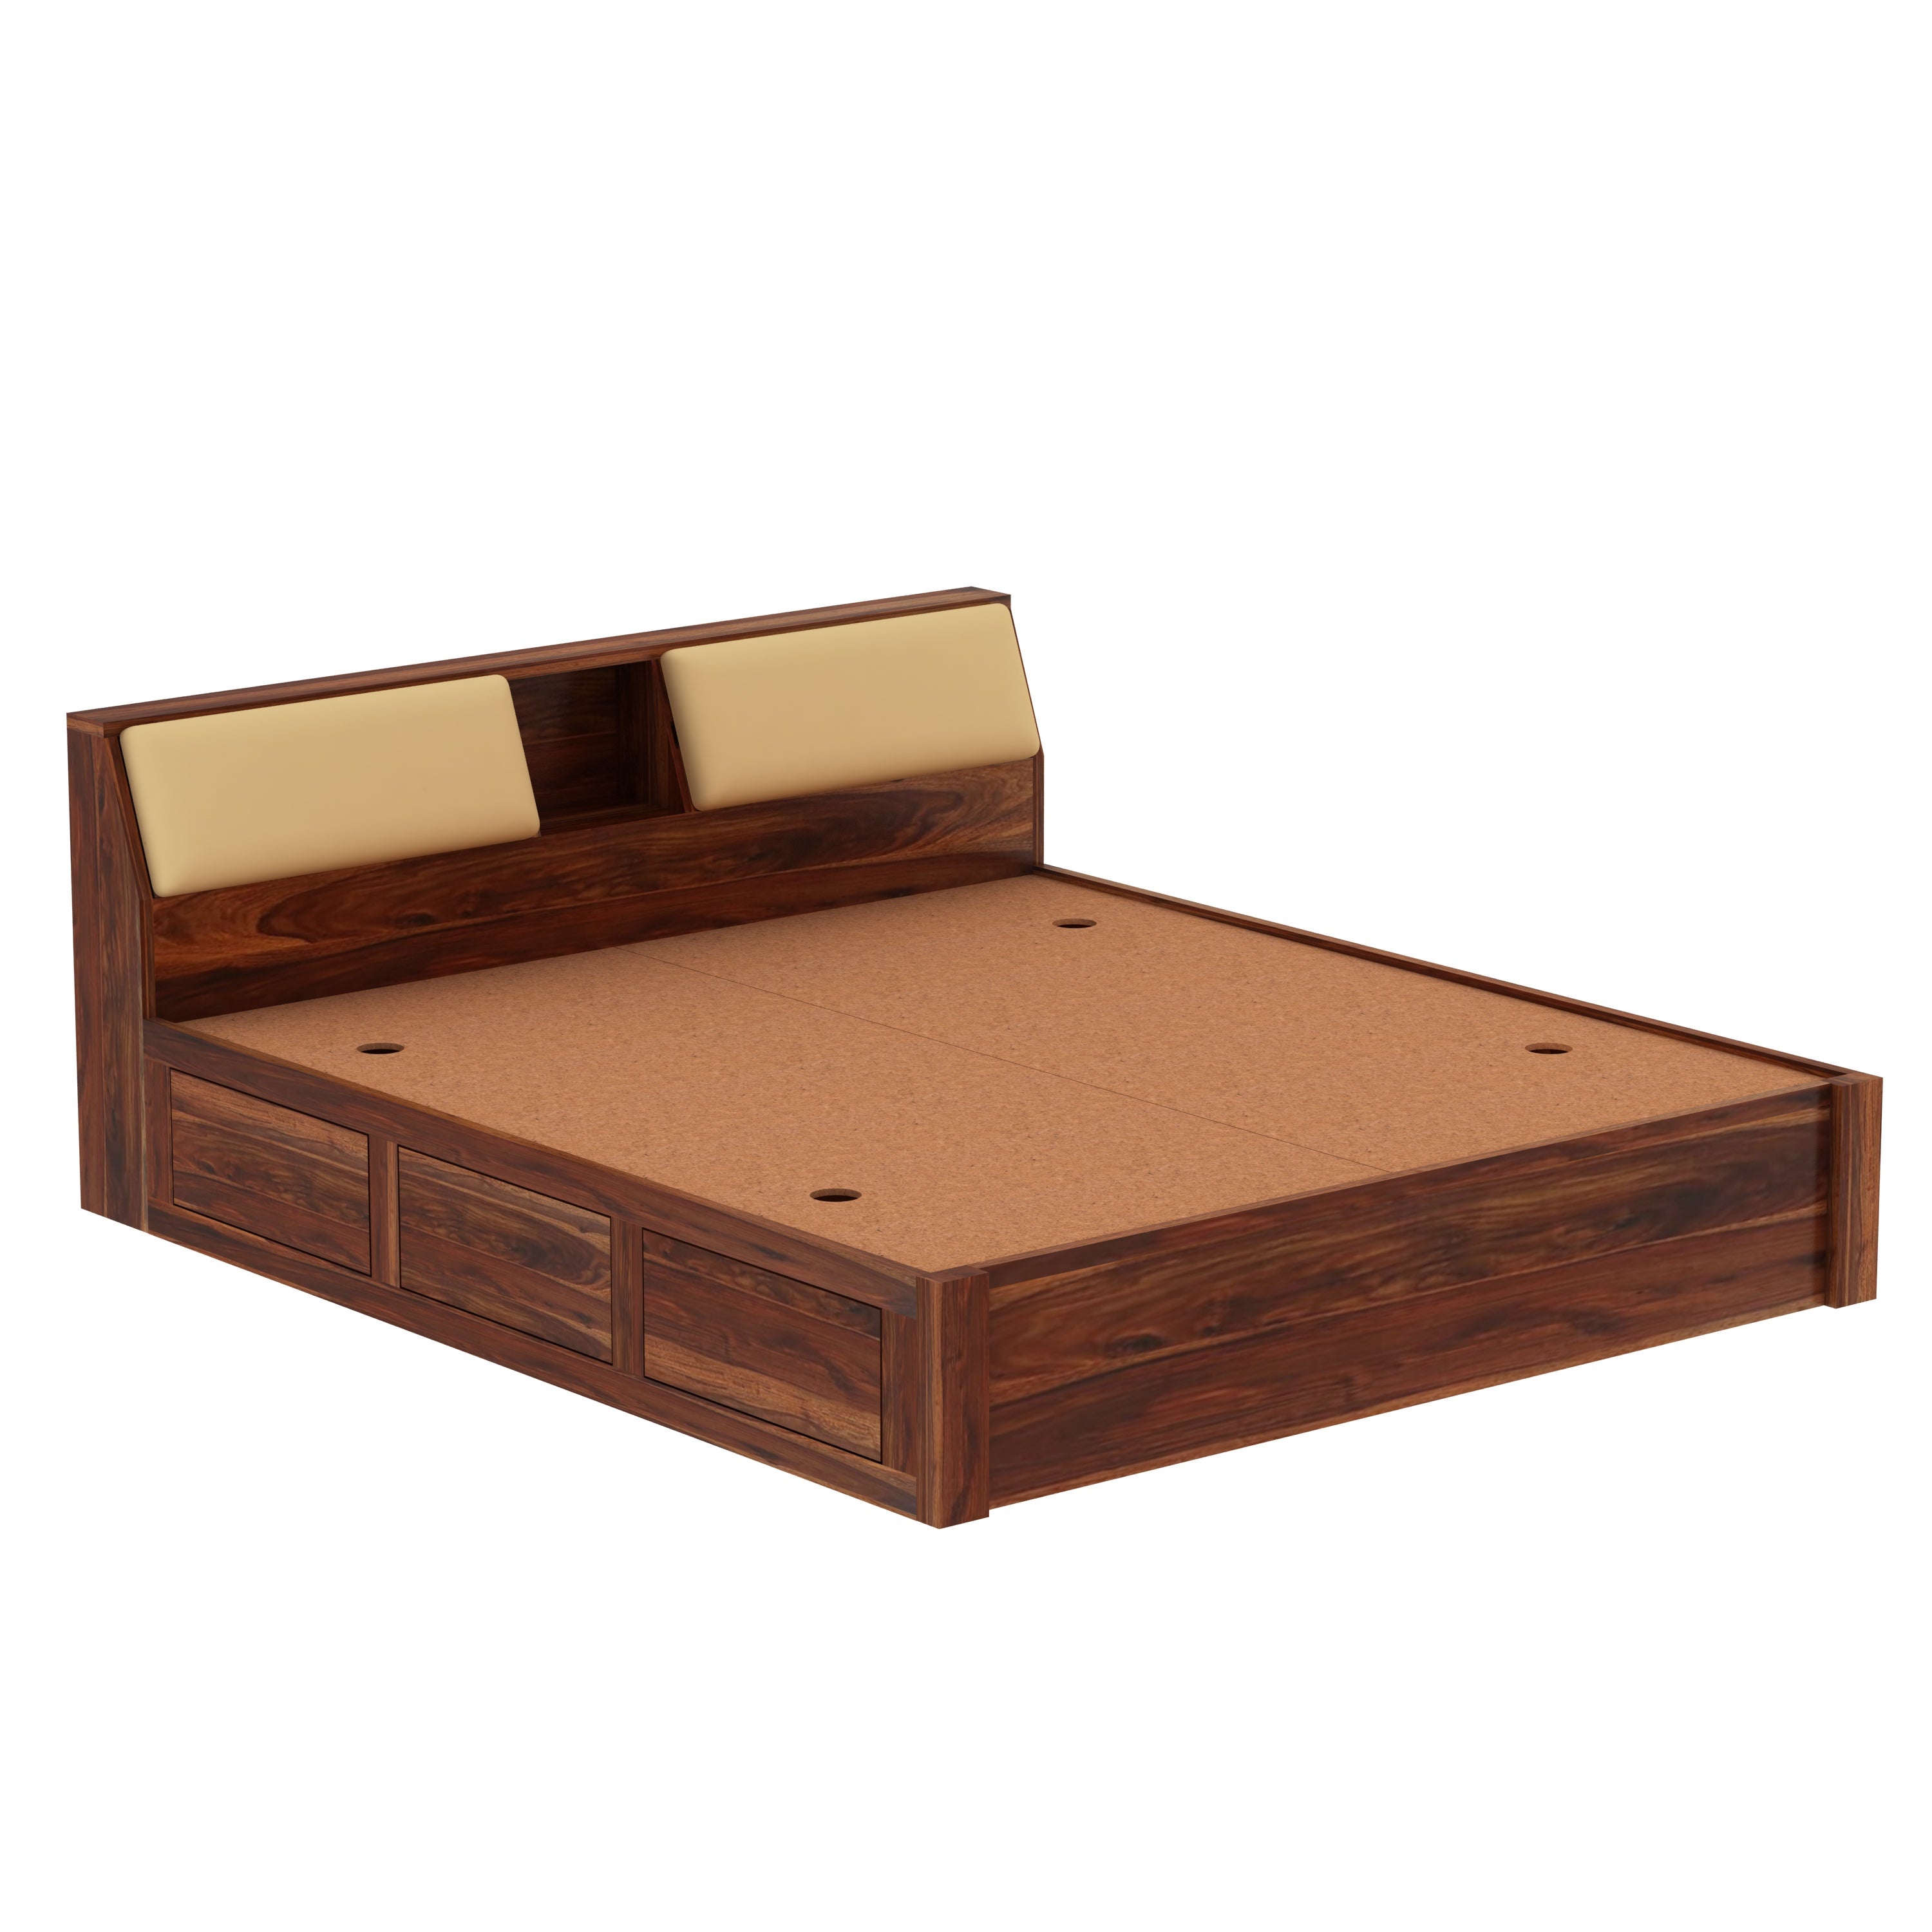 Rubikk Solid Sheesham Wood Bed With Box Storage (King Size, Natural Finish)